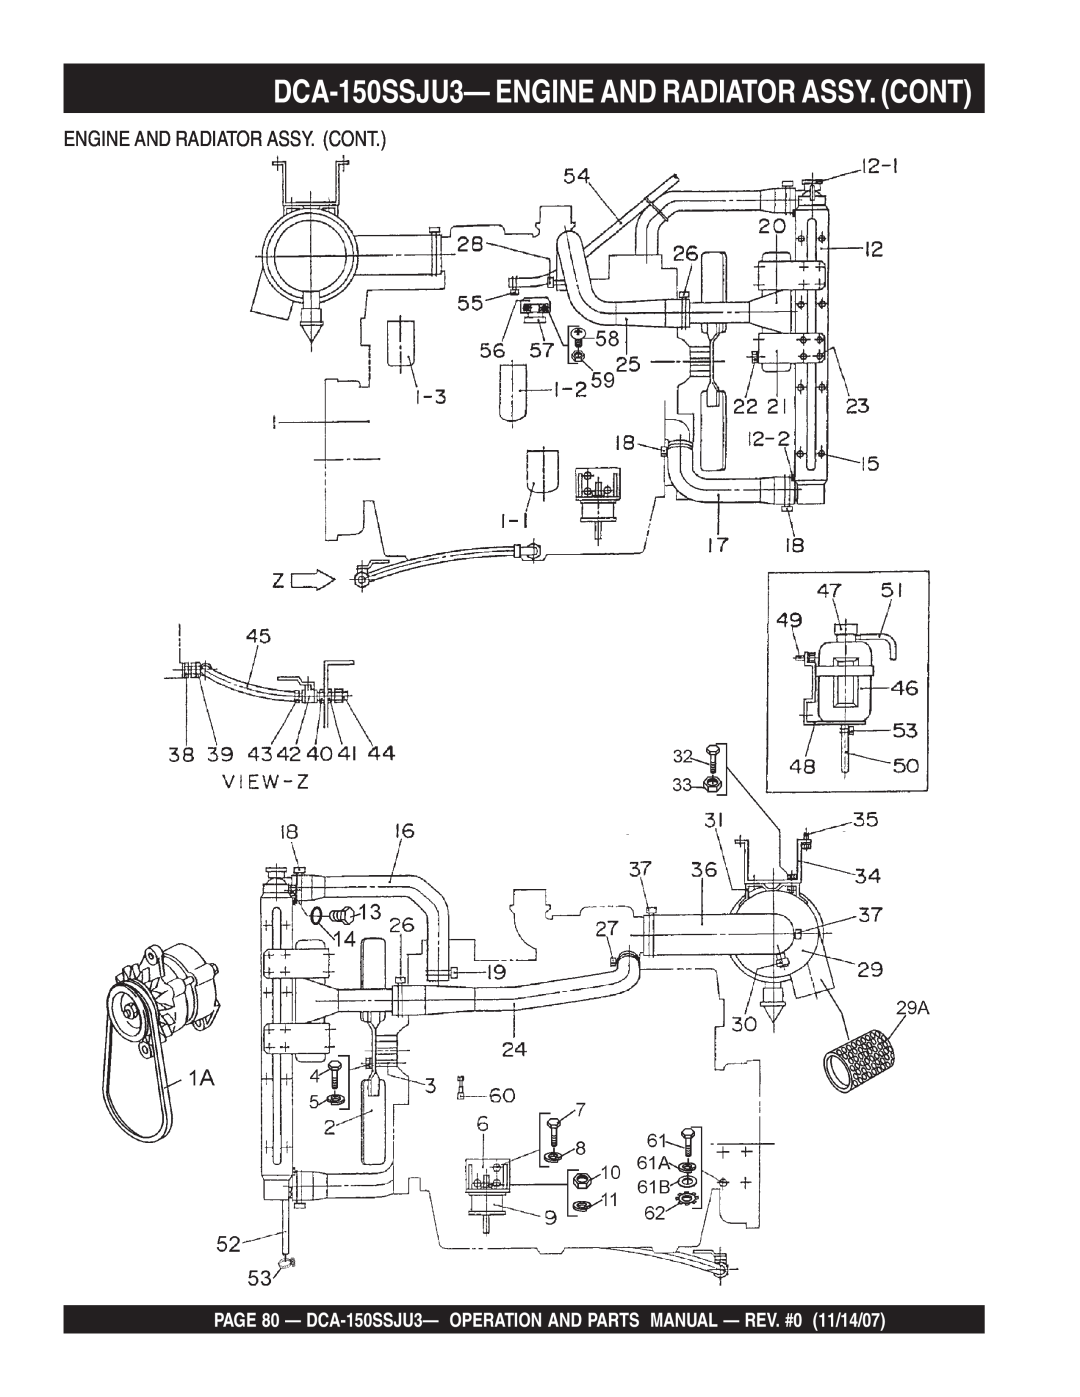 Multiquip operation manual DCA-150SSJU3—ENGINE AND RADIATOR ASSY. CONT, Engine And Radiator Assy. Cont 